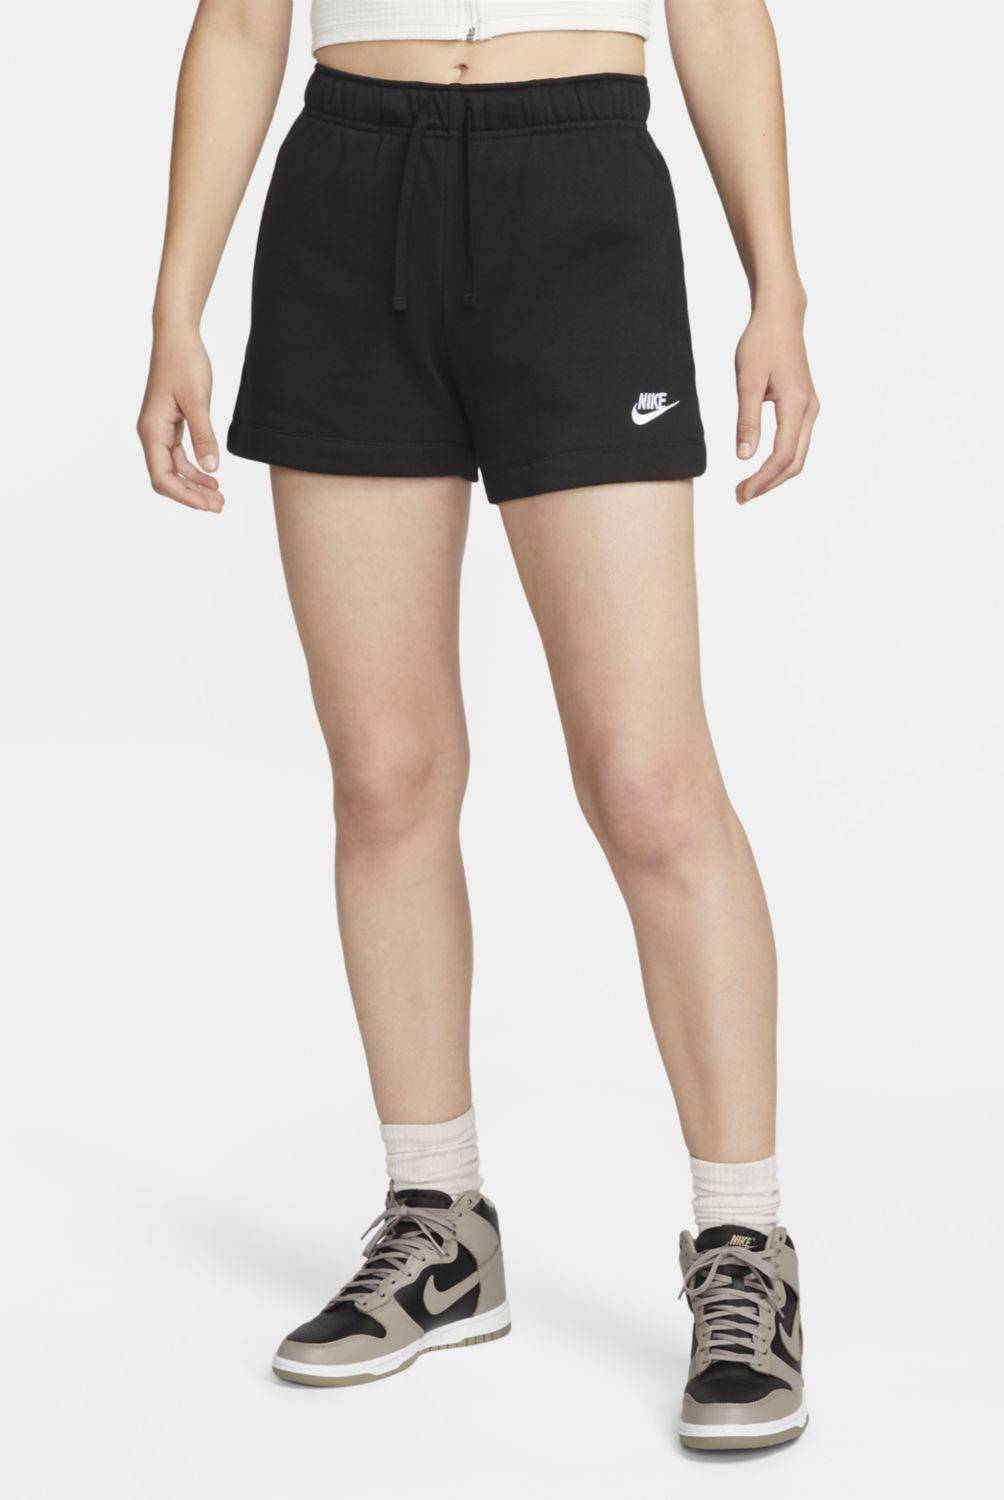 NIKE Short Deportivo Mujer Nike